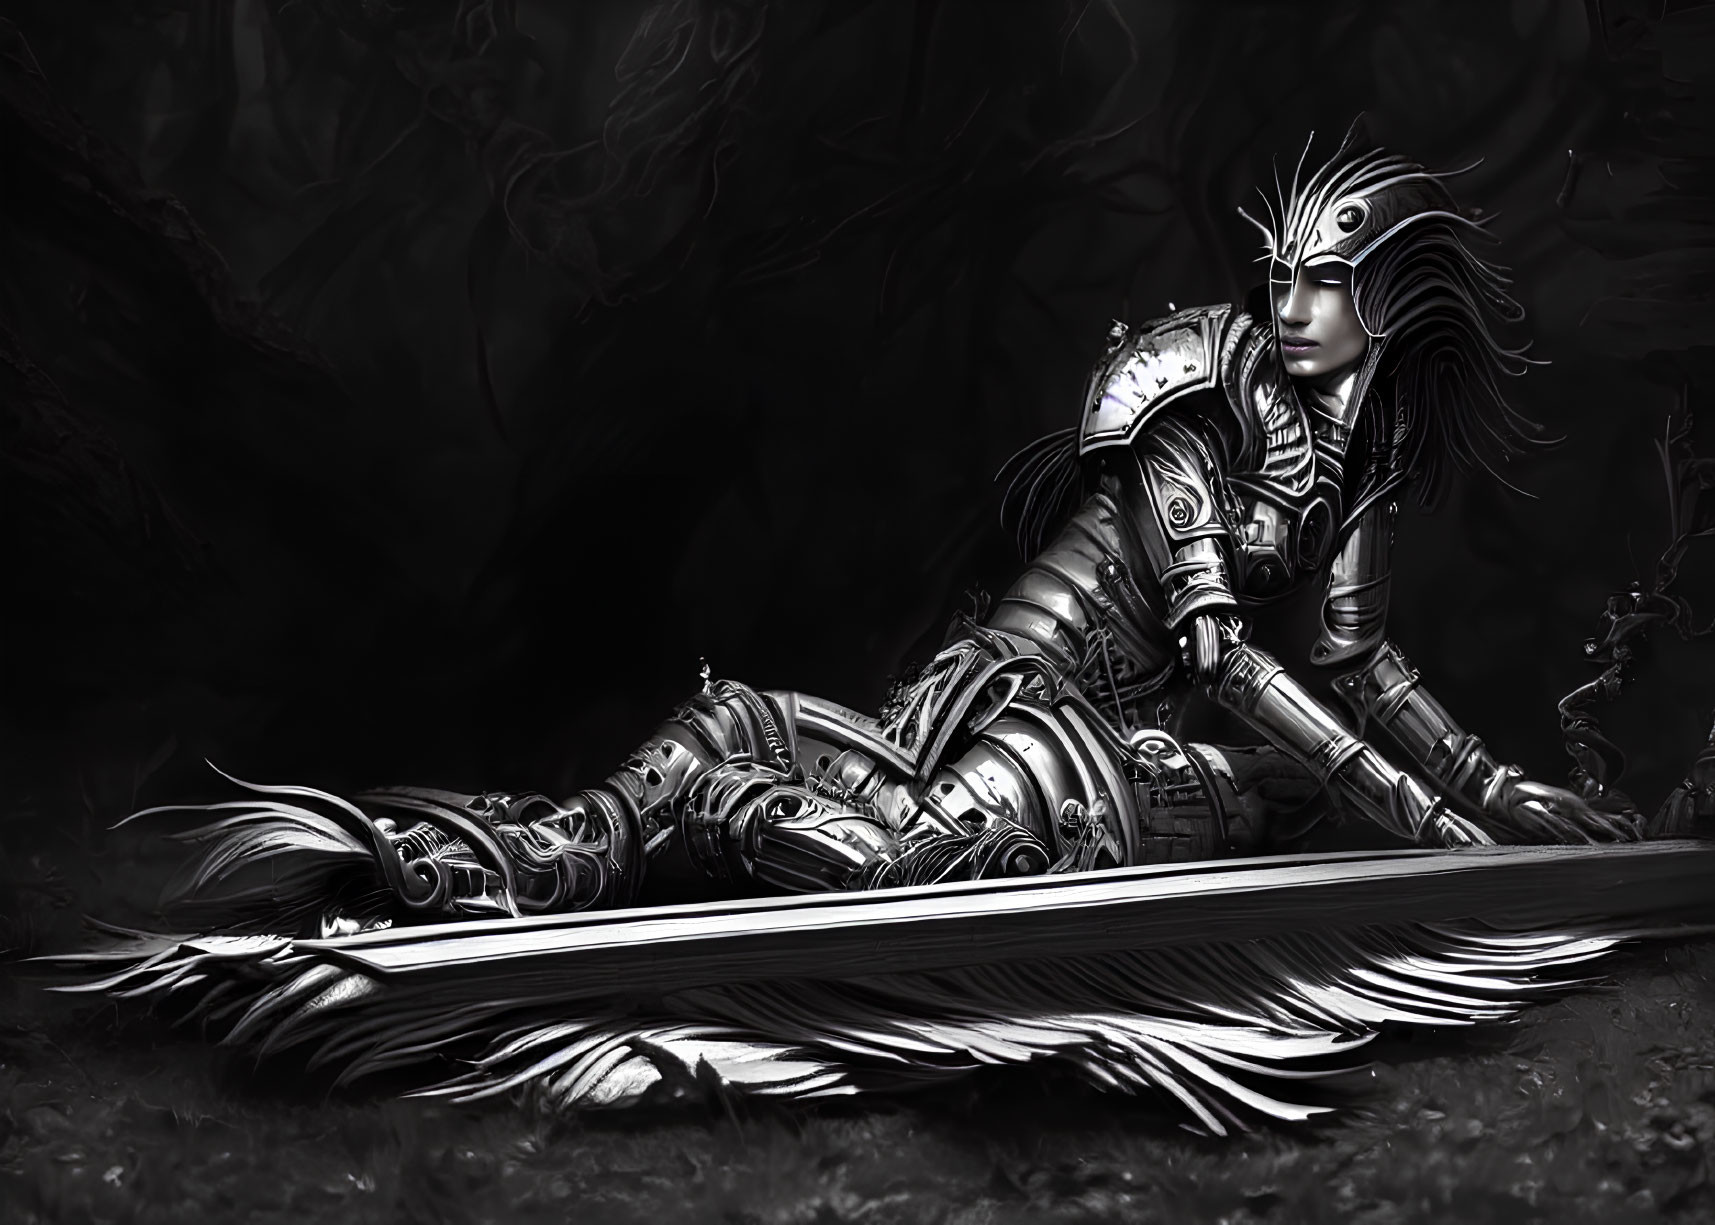 Monochromatic digital artwork of warrior in ornate armor on giant sword in dark mist